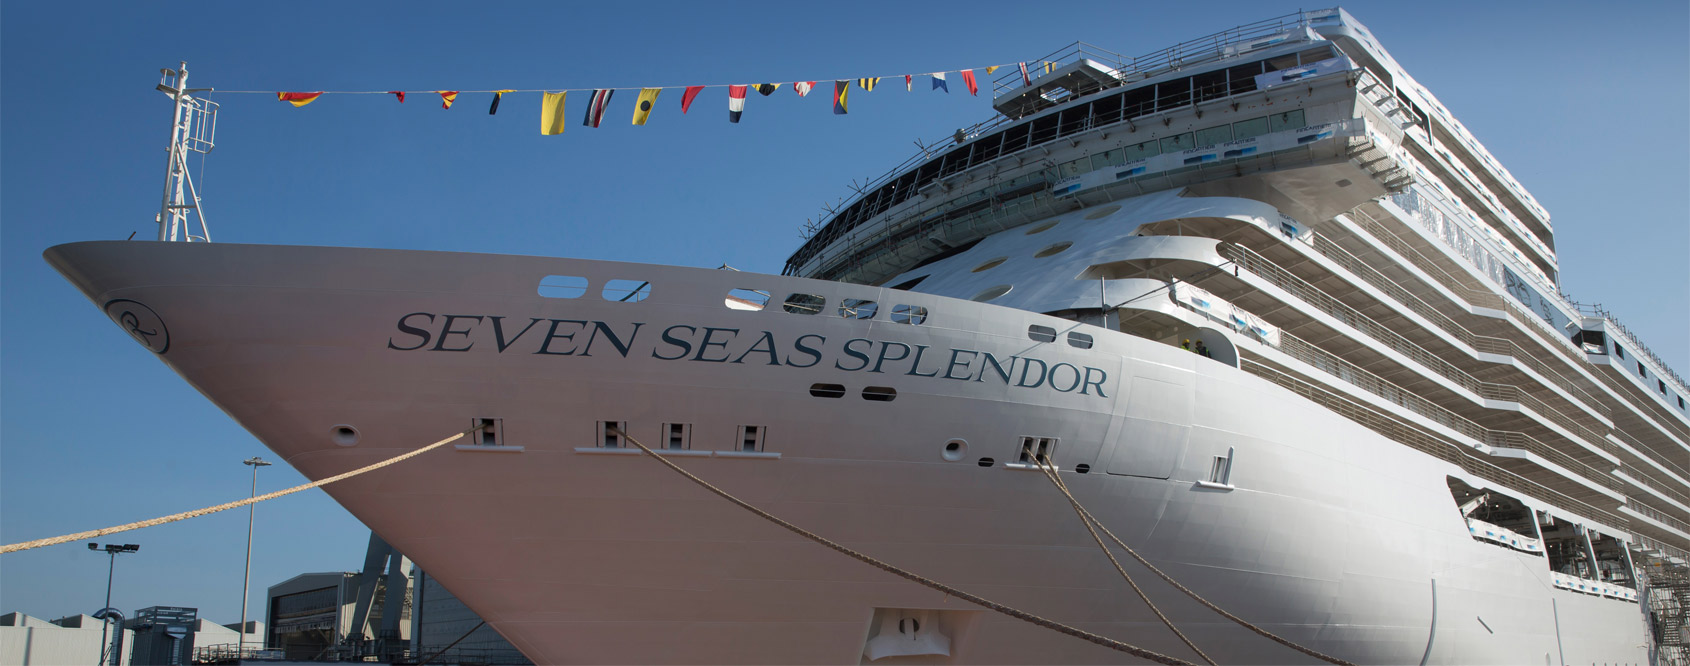 Regent Seven Seas Cruises Main Image